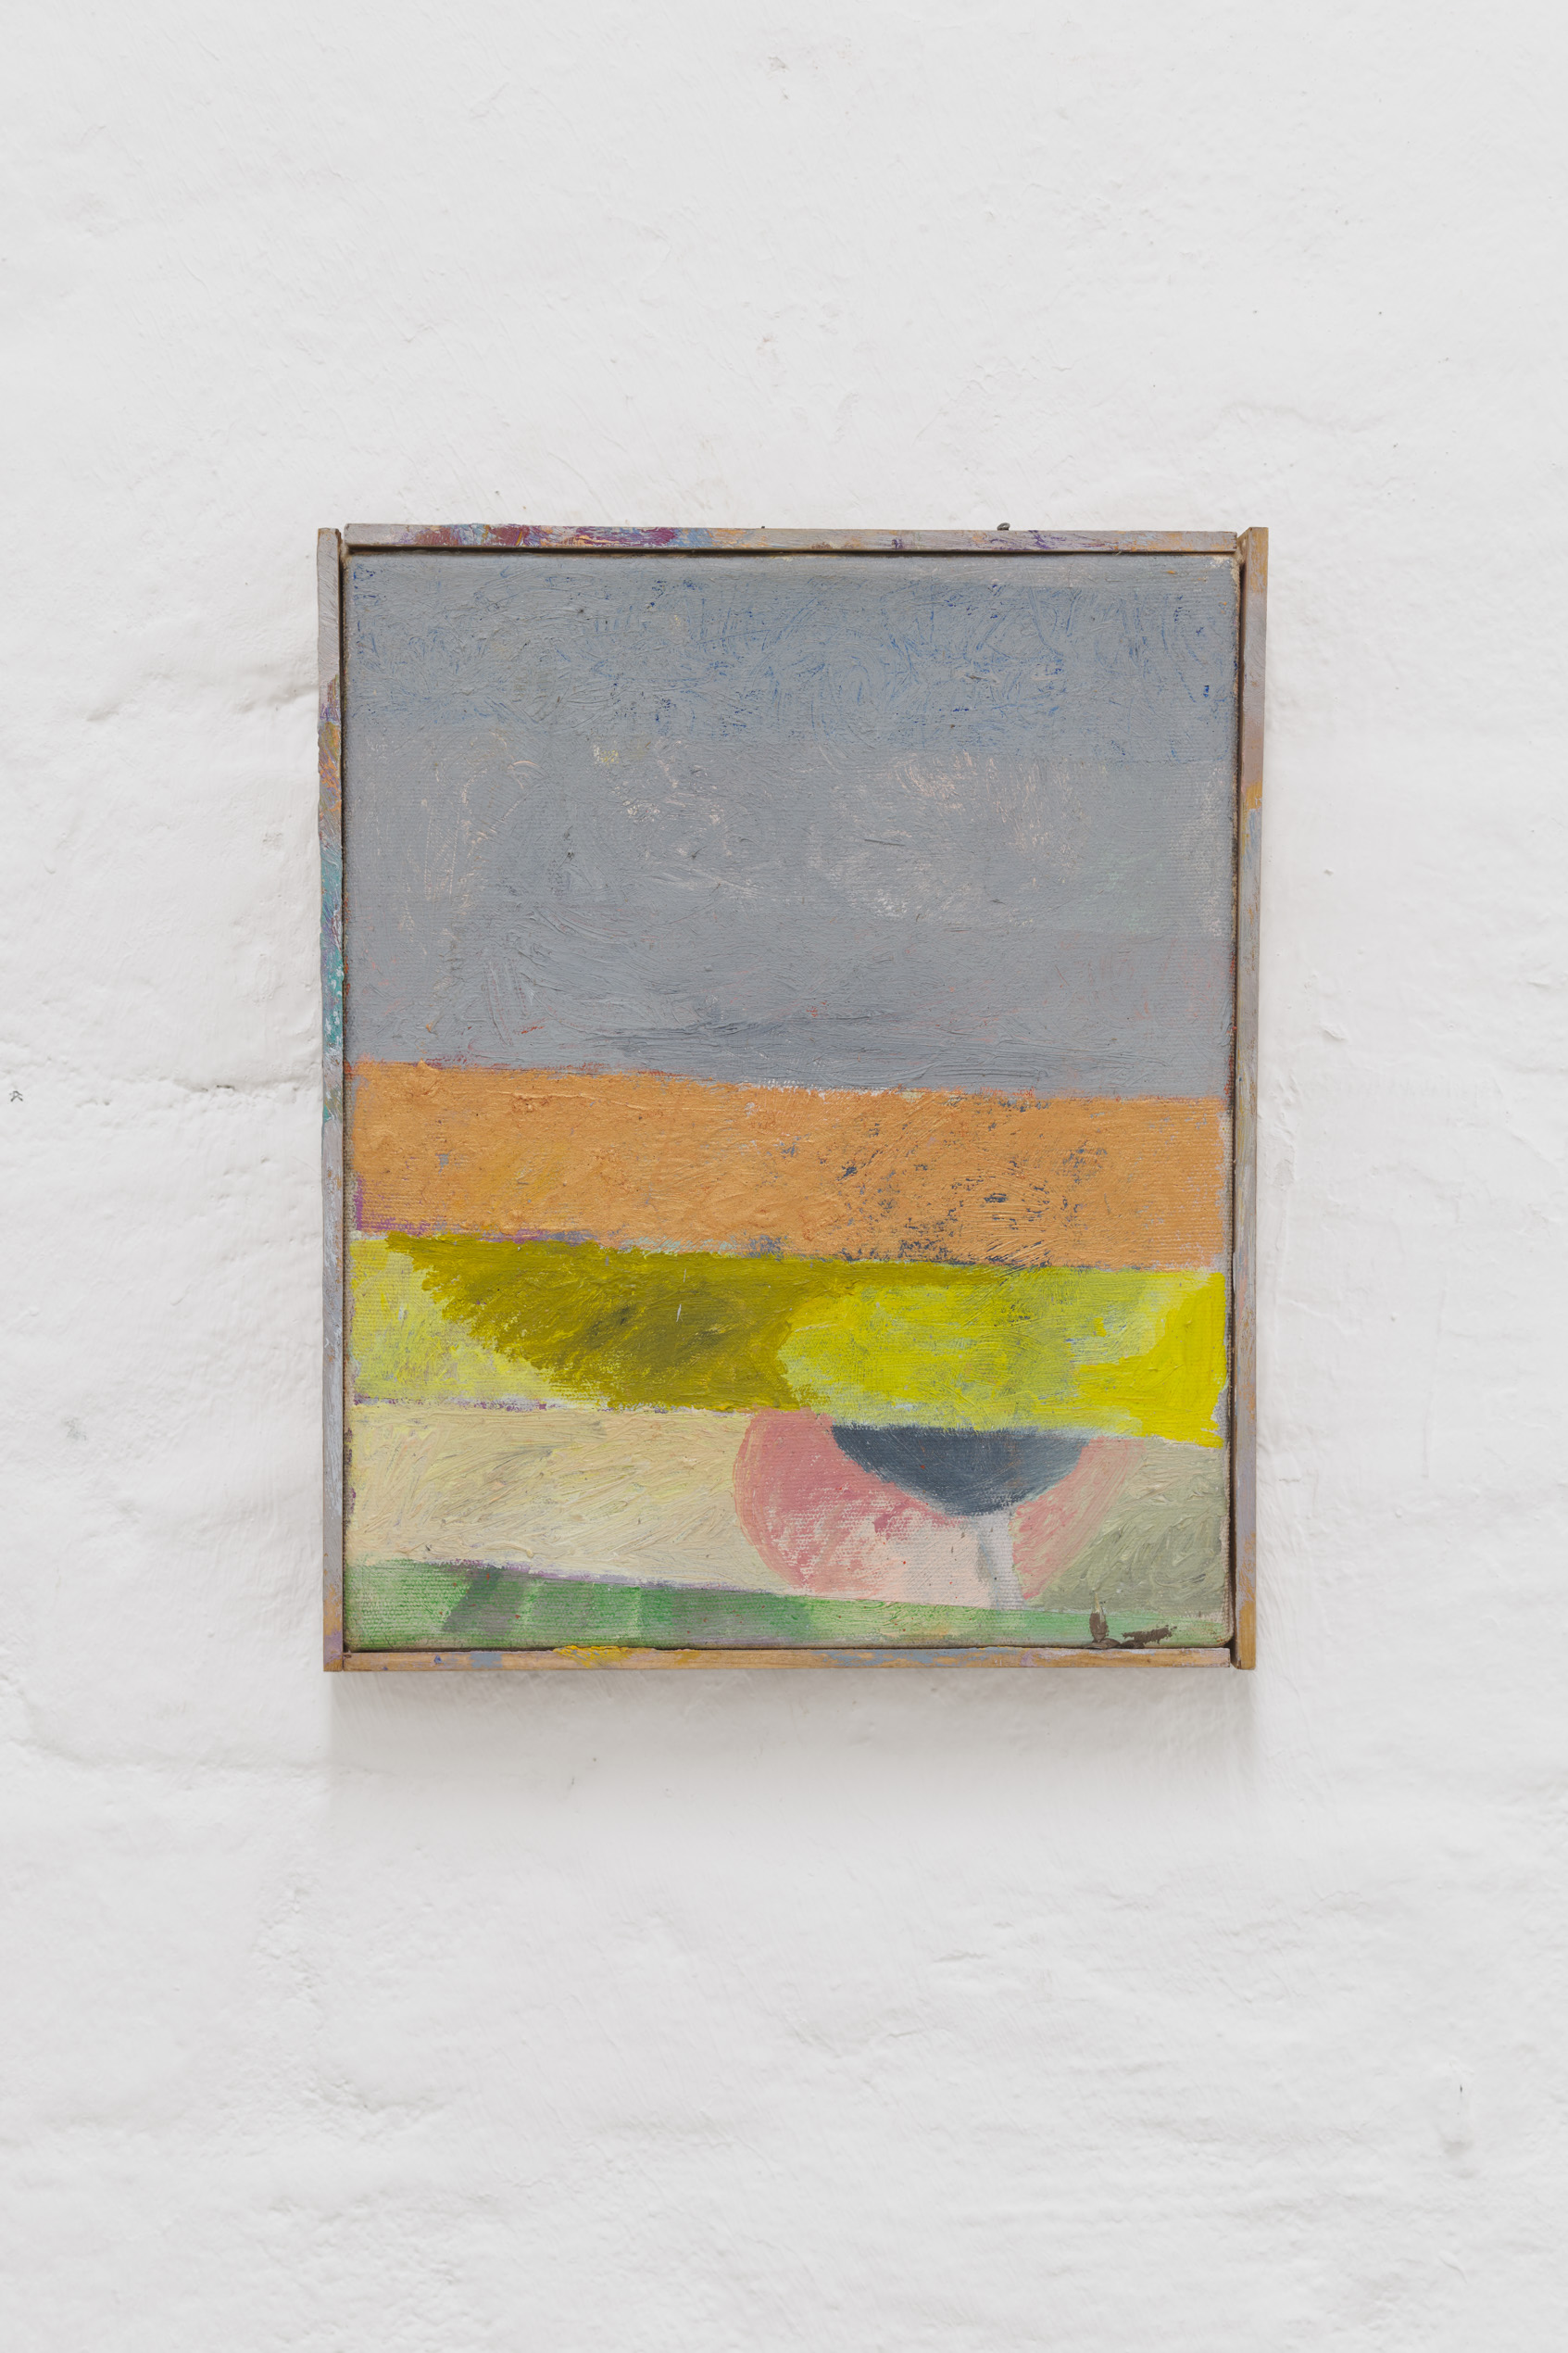 Edin Zenun, Ohne Titel, 2019, 26 x 21 cm, oil, clay, pigment and oil pastel on canvas, artist frame